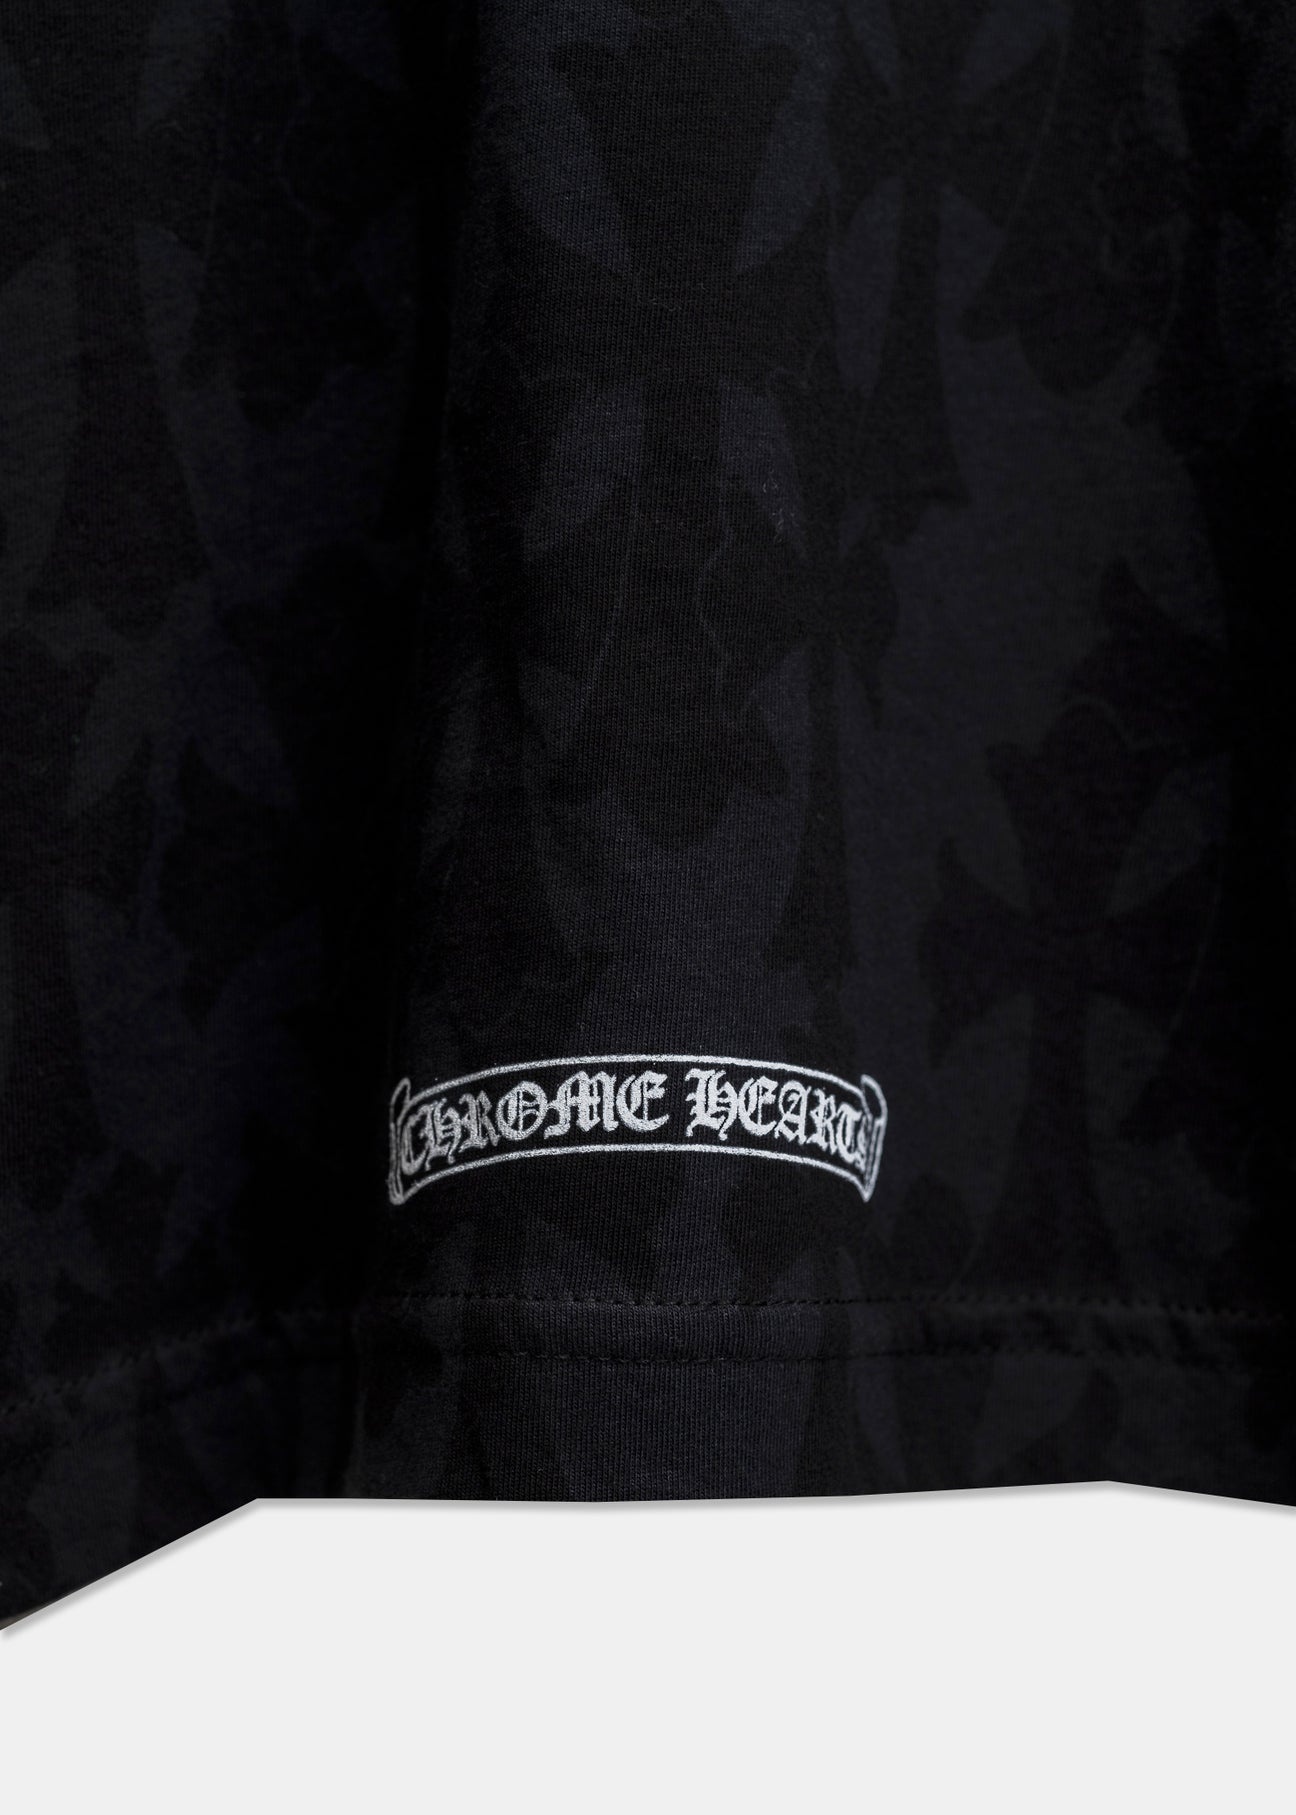 Black Cross Camo  Chrome Hearts Logo T-Shirt - 6